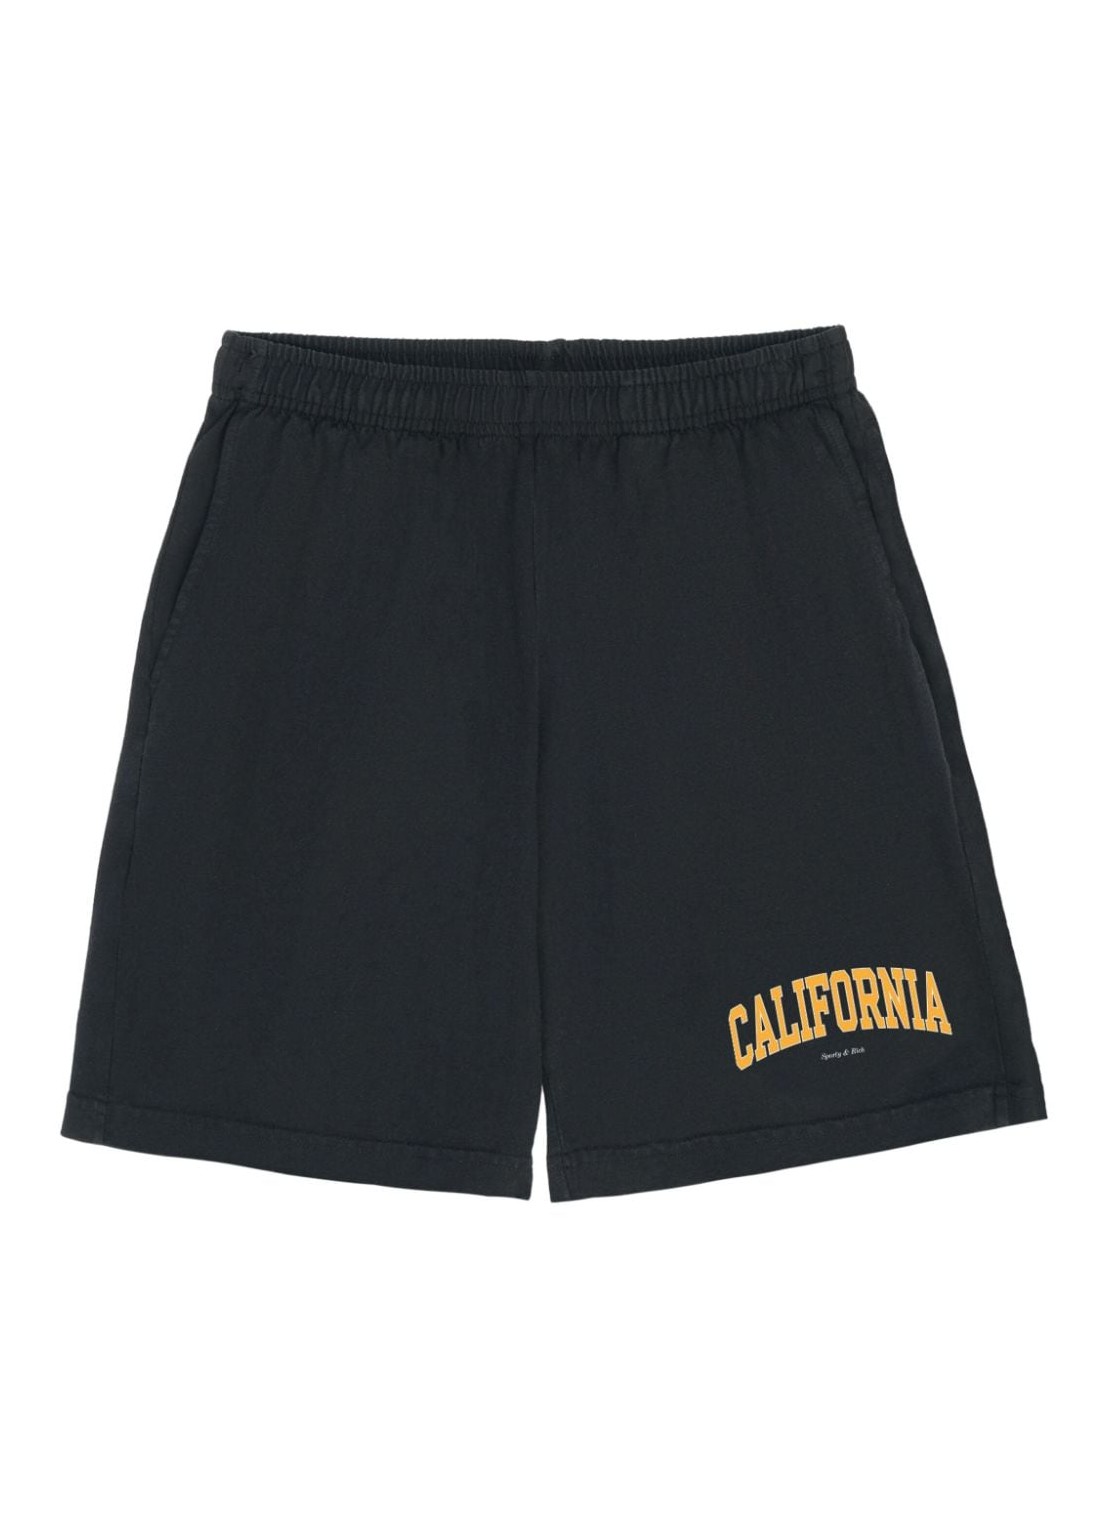 Pantalon corto sporty & rich short pant womancalifornia gym shorts faded - sh021s405cf faded black t